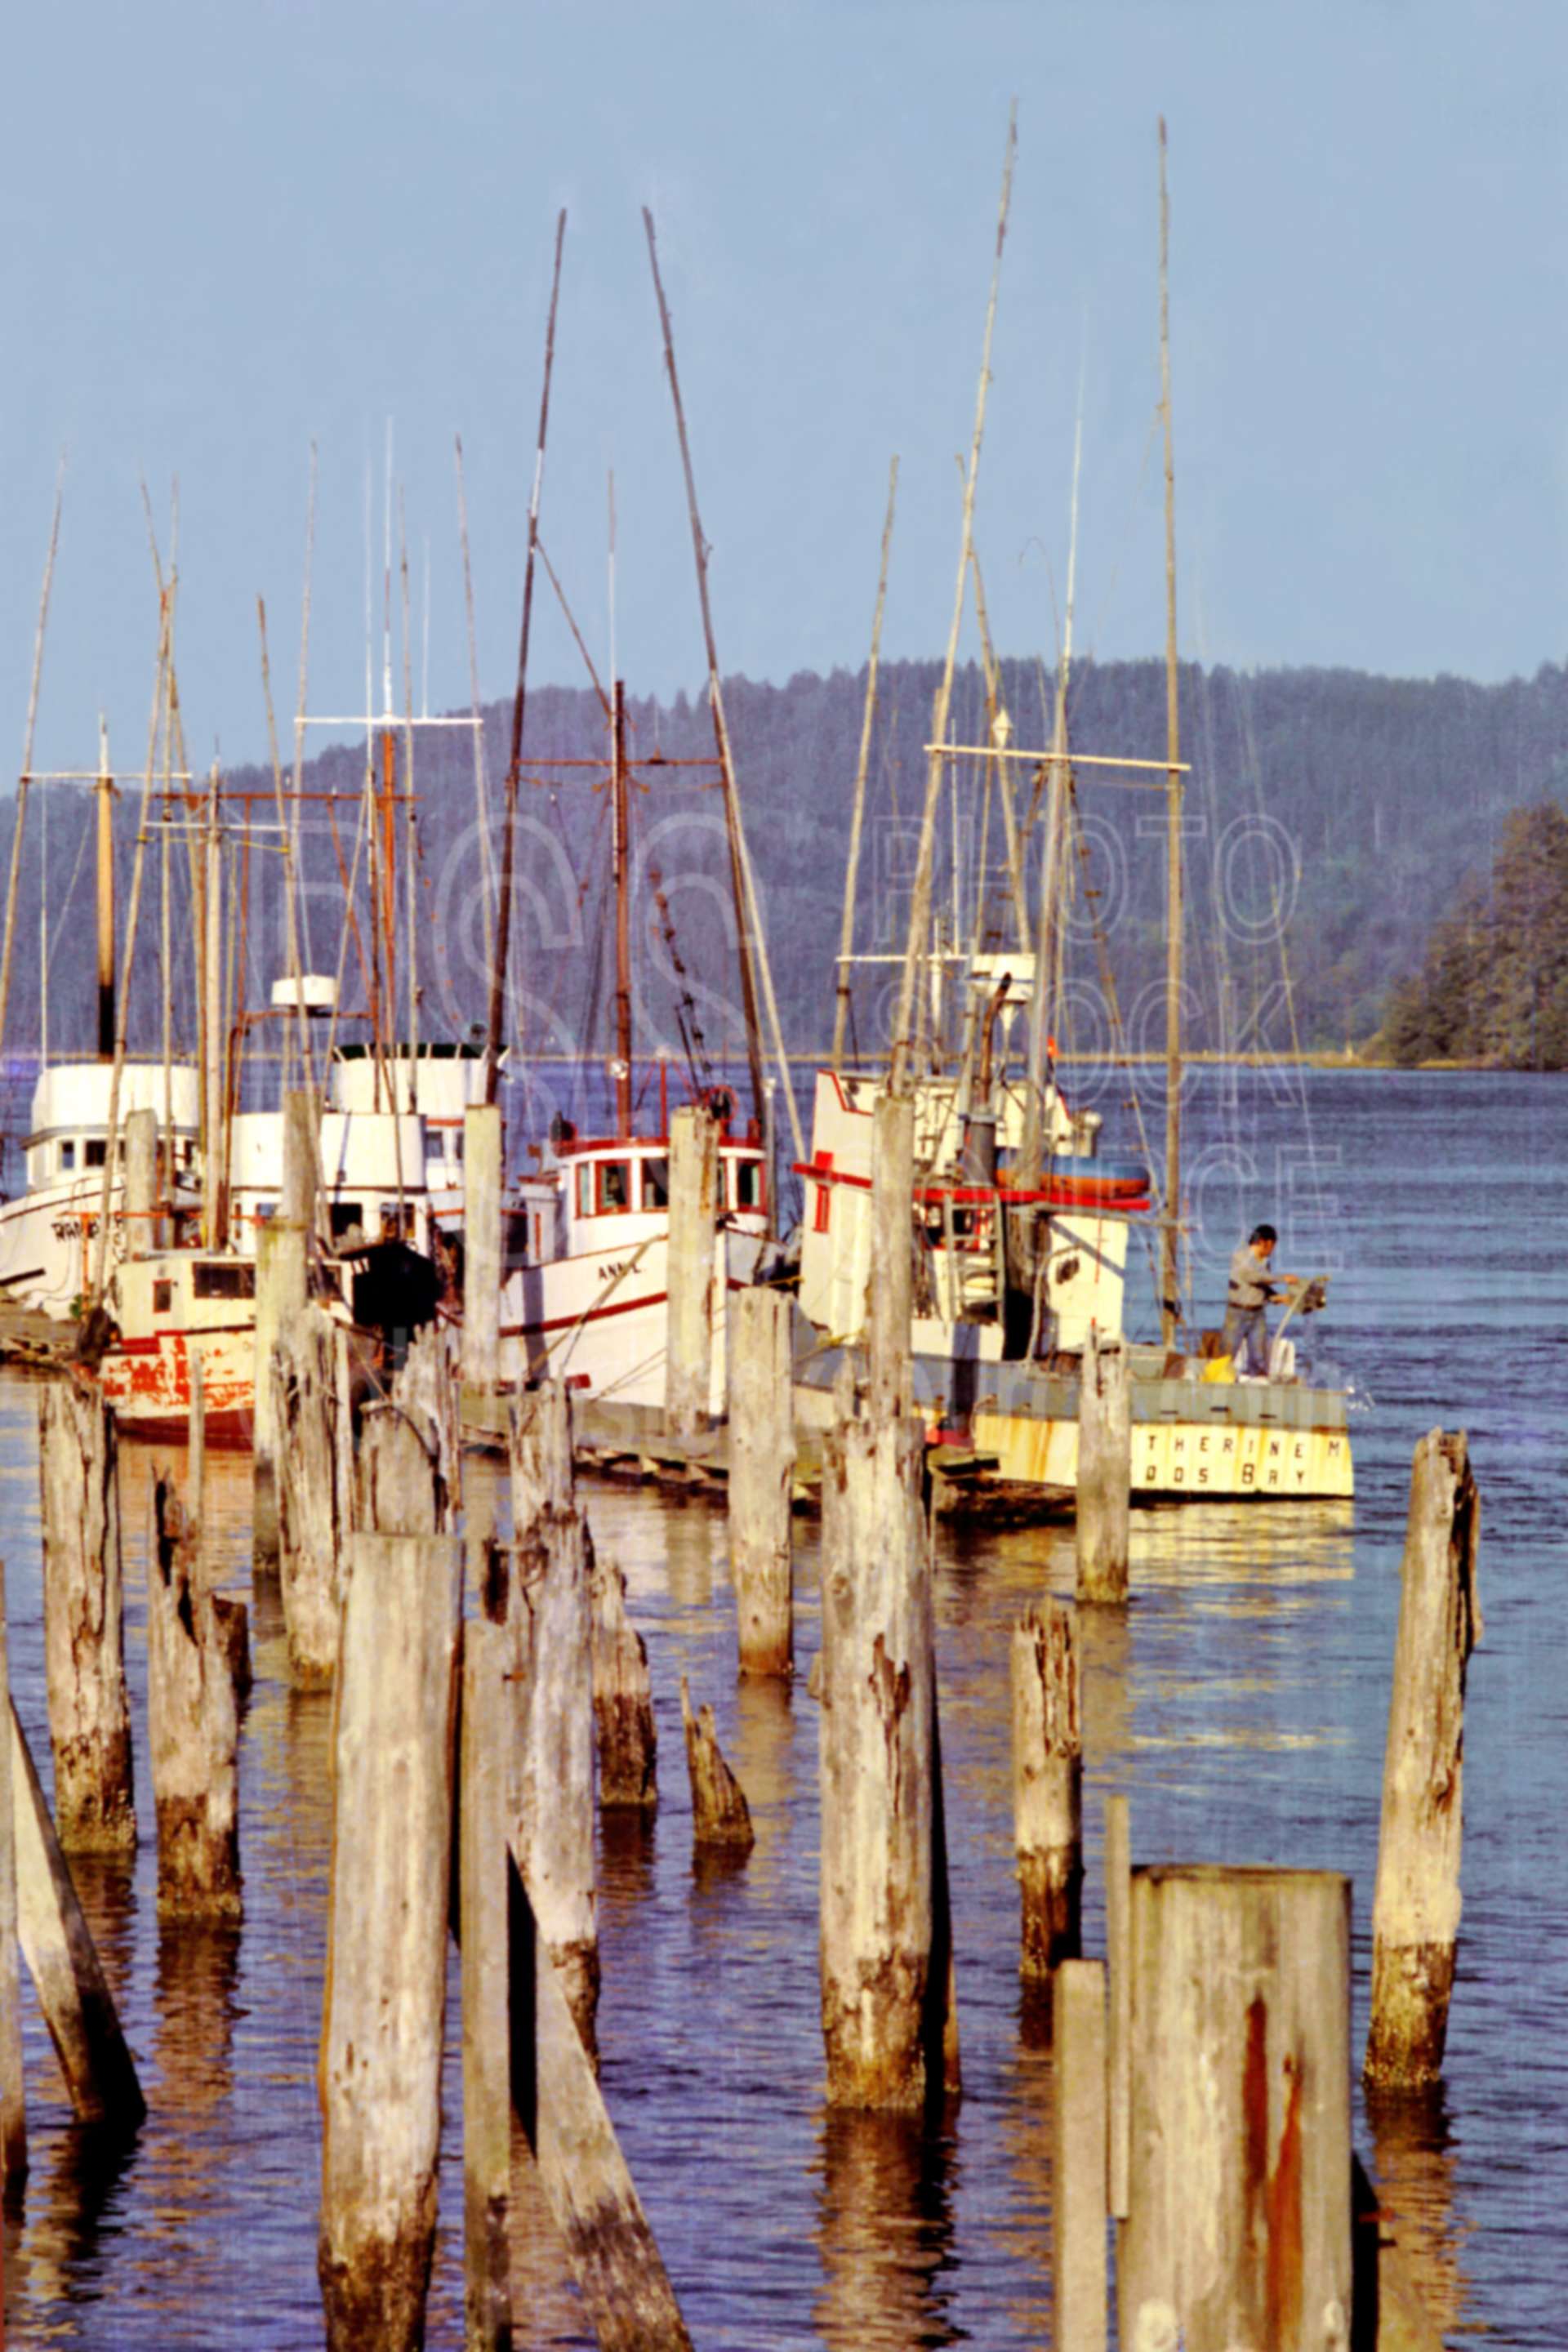 Fishingboats,dock,fishing boat,harbor,river,siuslaw river,usas,lakes rivers,boats